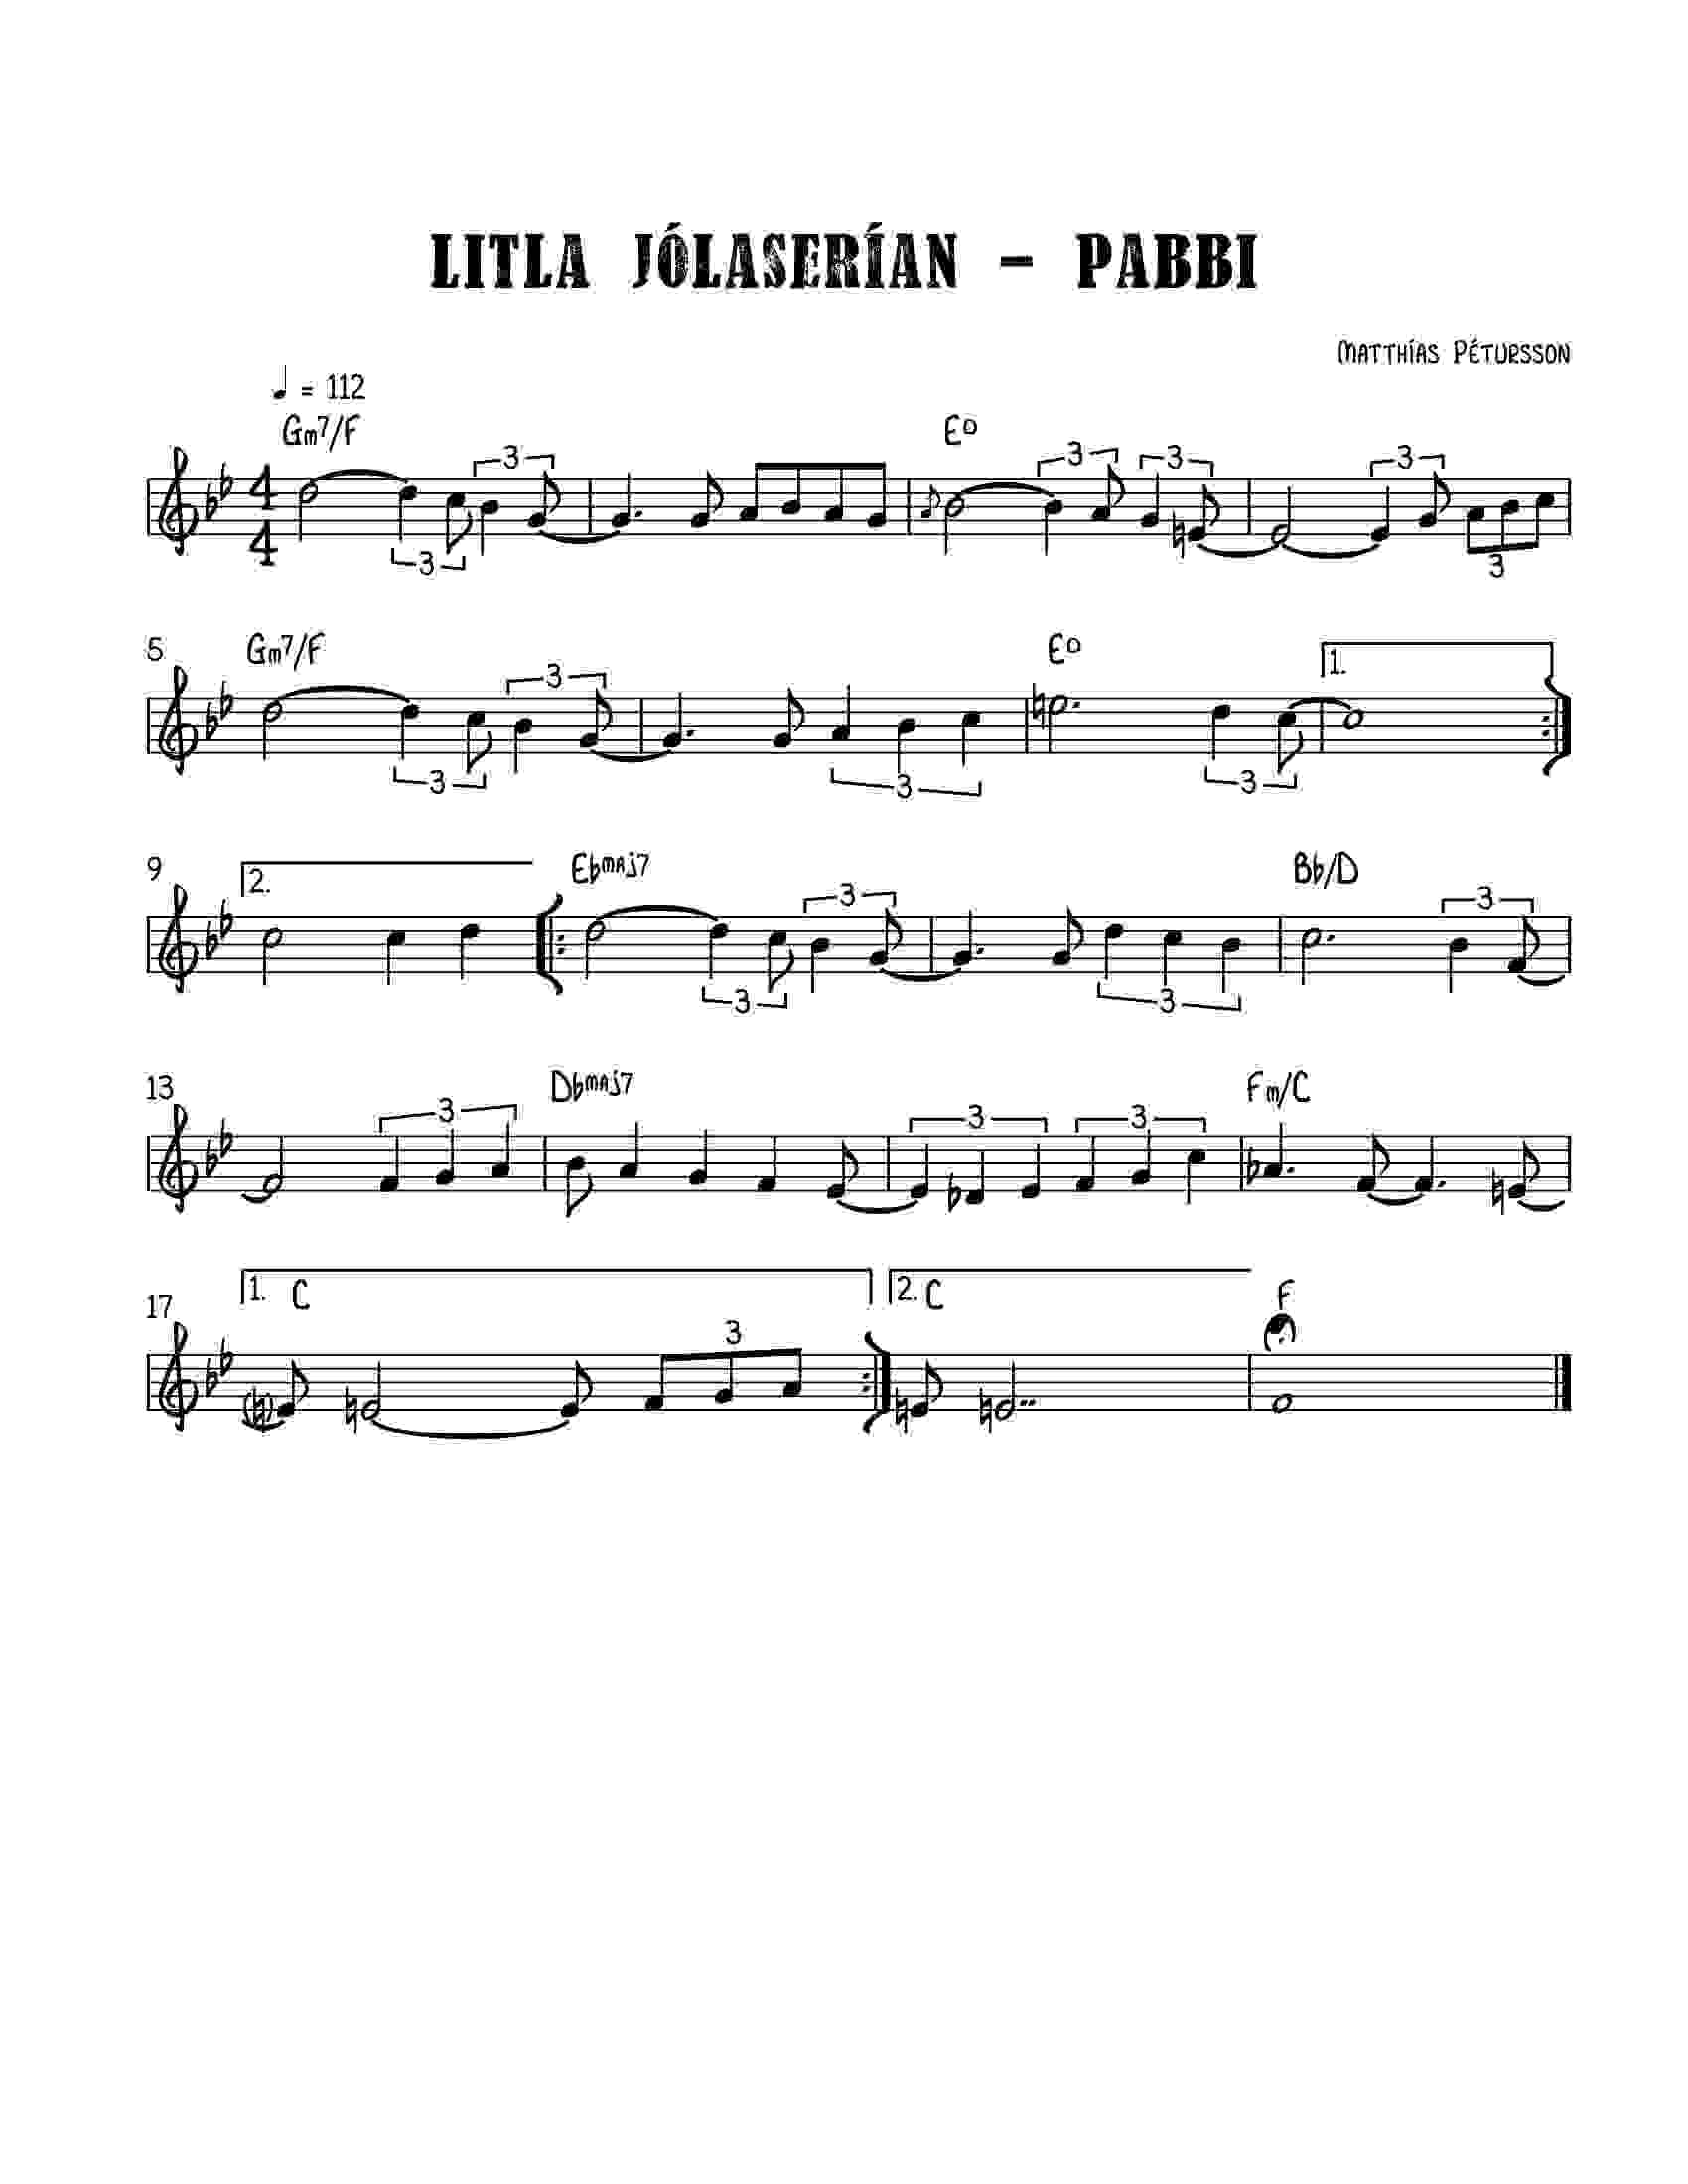 Pabbi sheet music